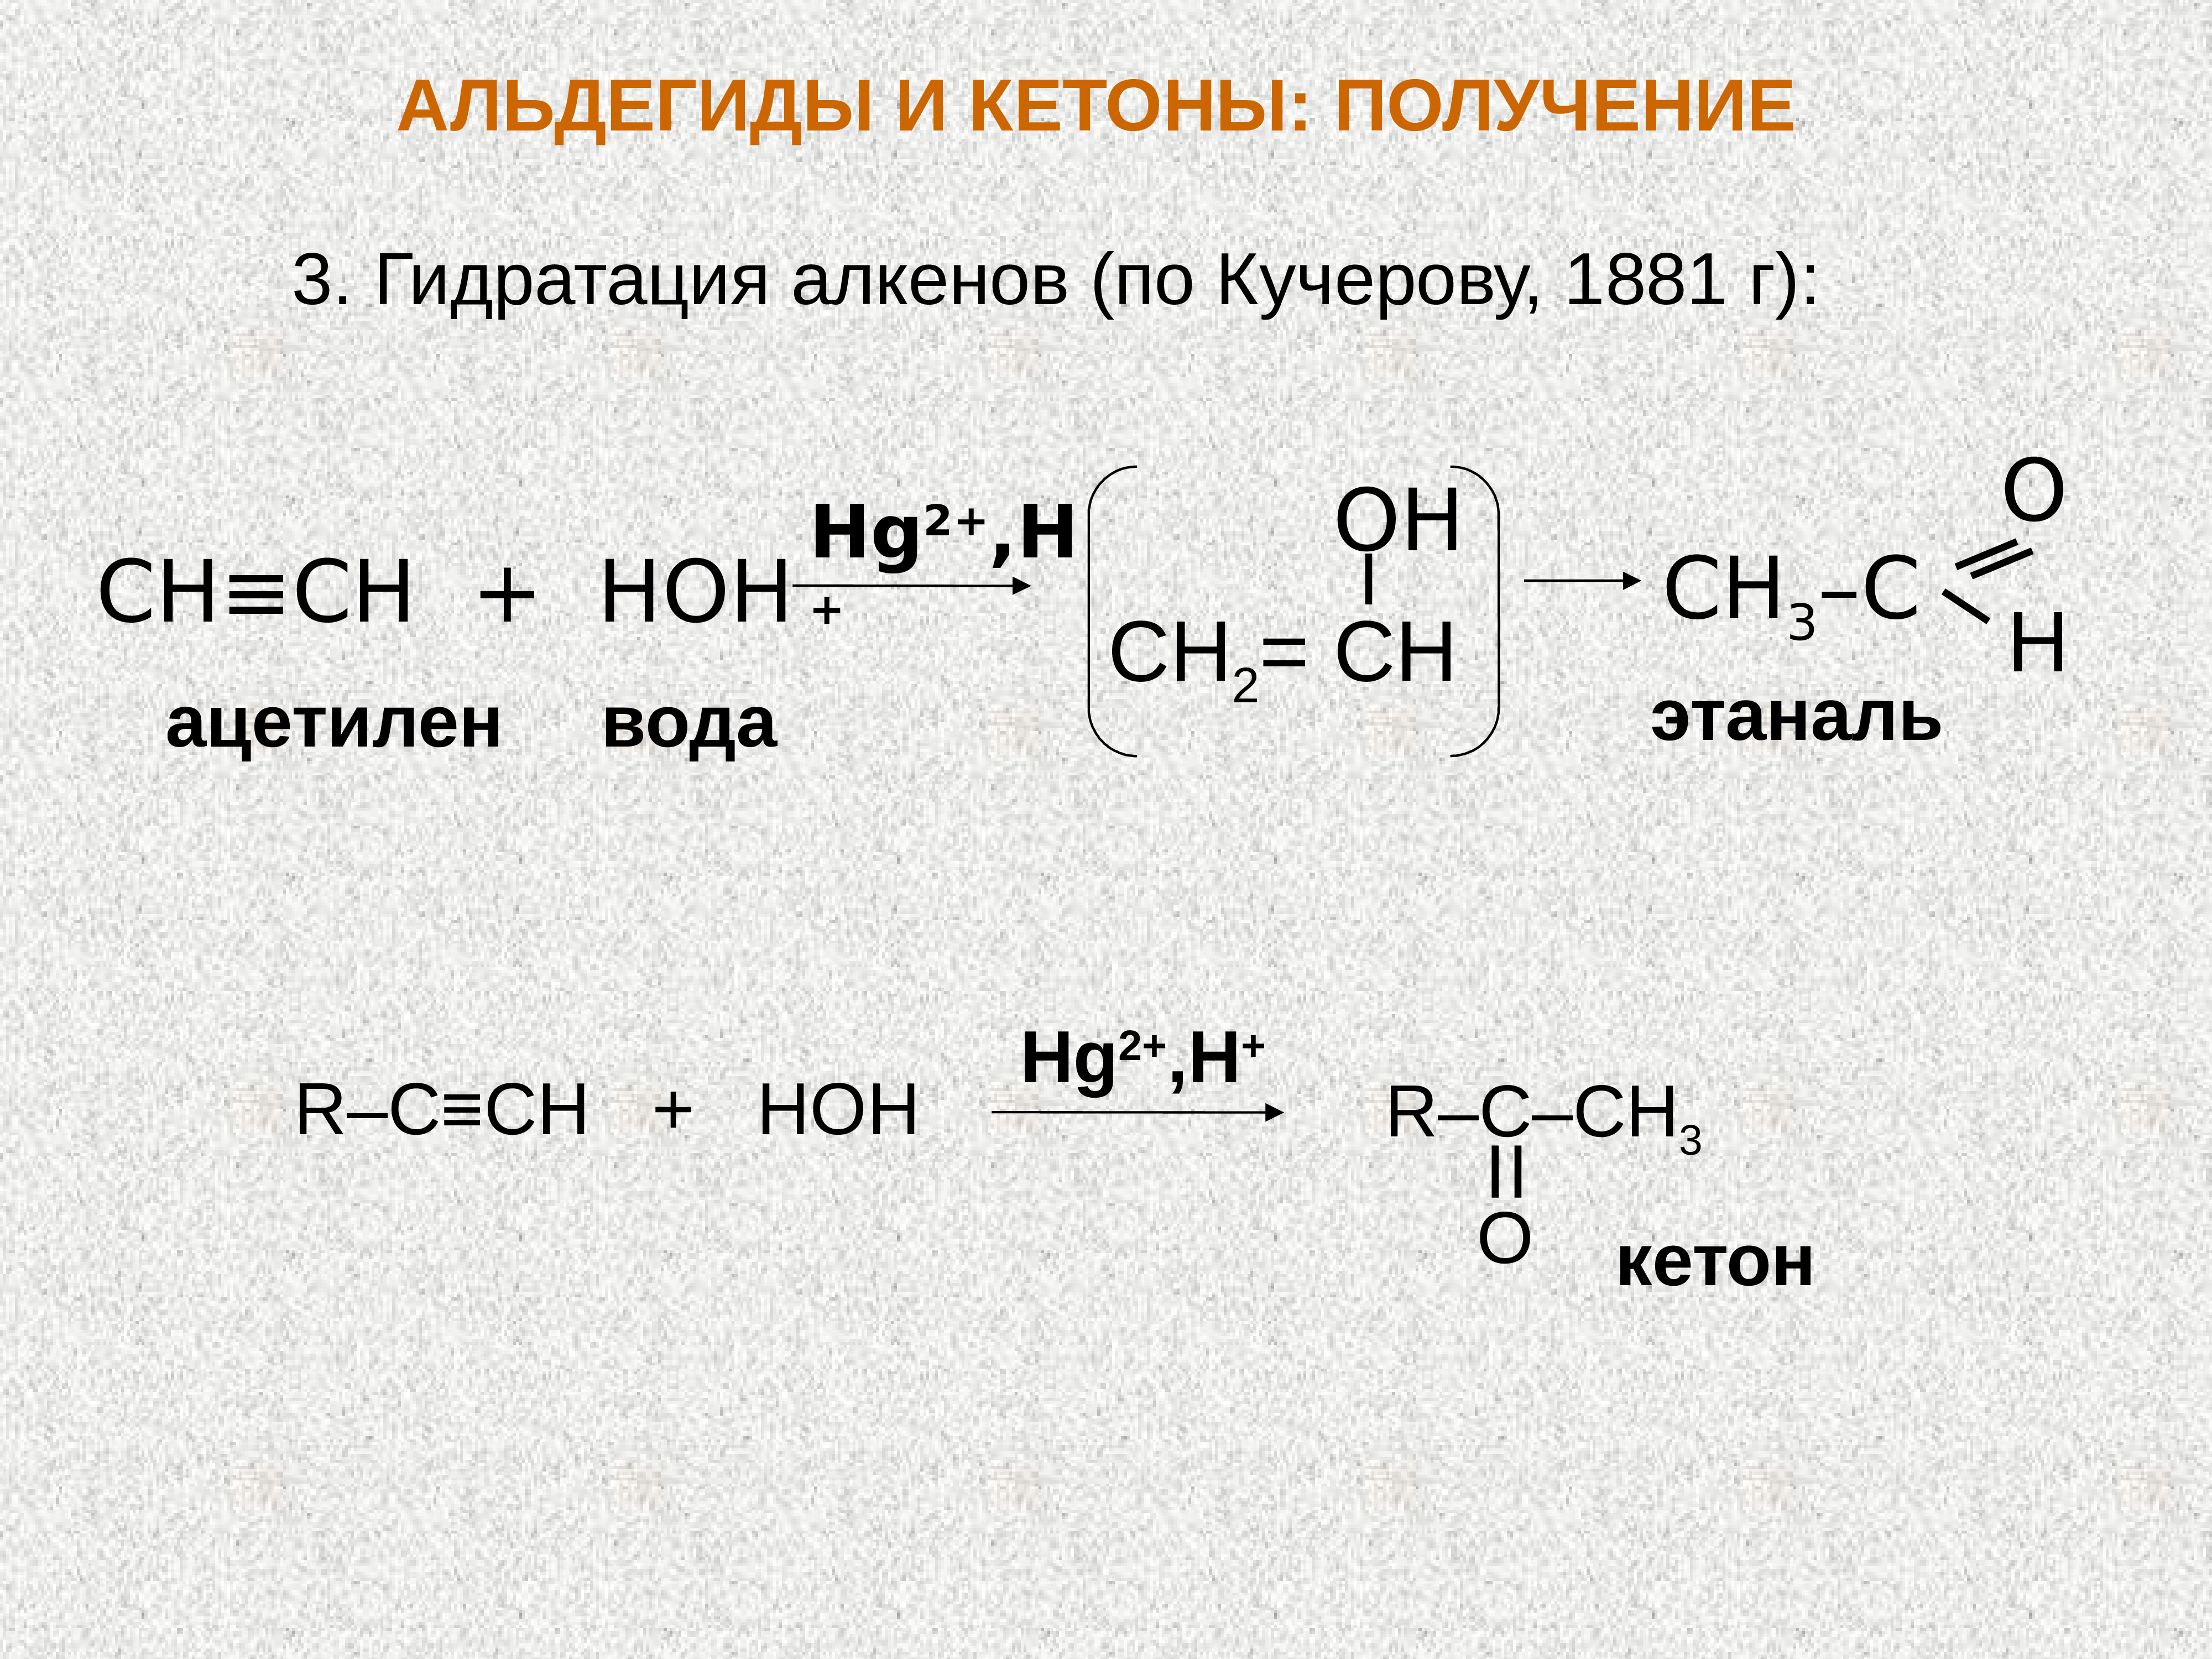 Реакции кучерова из ацетилена получают. Ацетилен и вода hg2+. Ацетилен + диэтилкетон. Ацетилен и вода реакция. Ацетилен плюс вода.